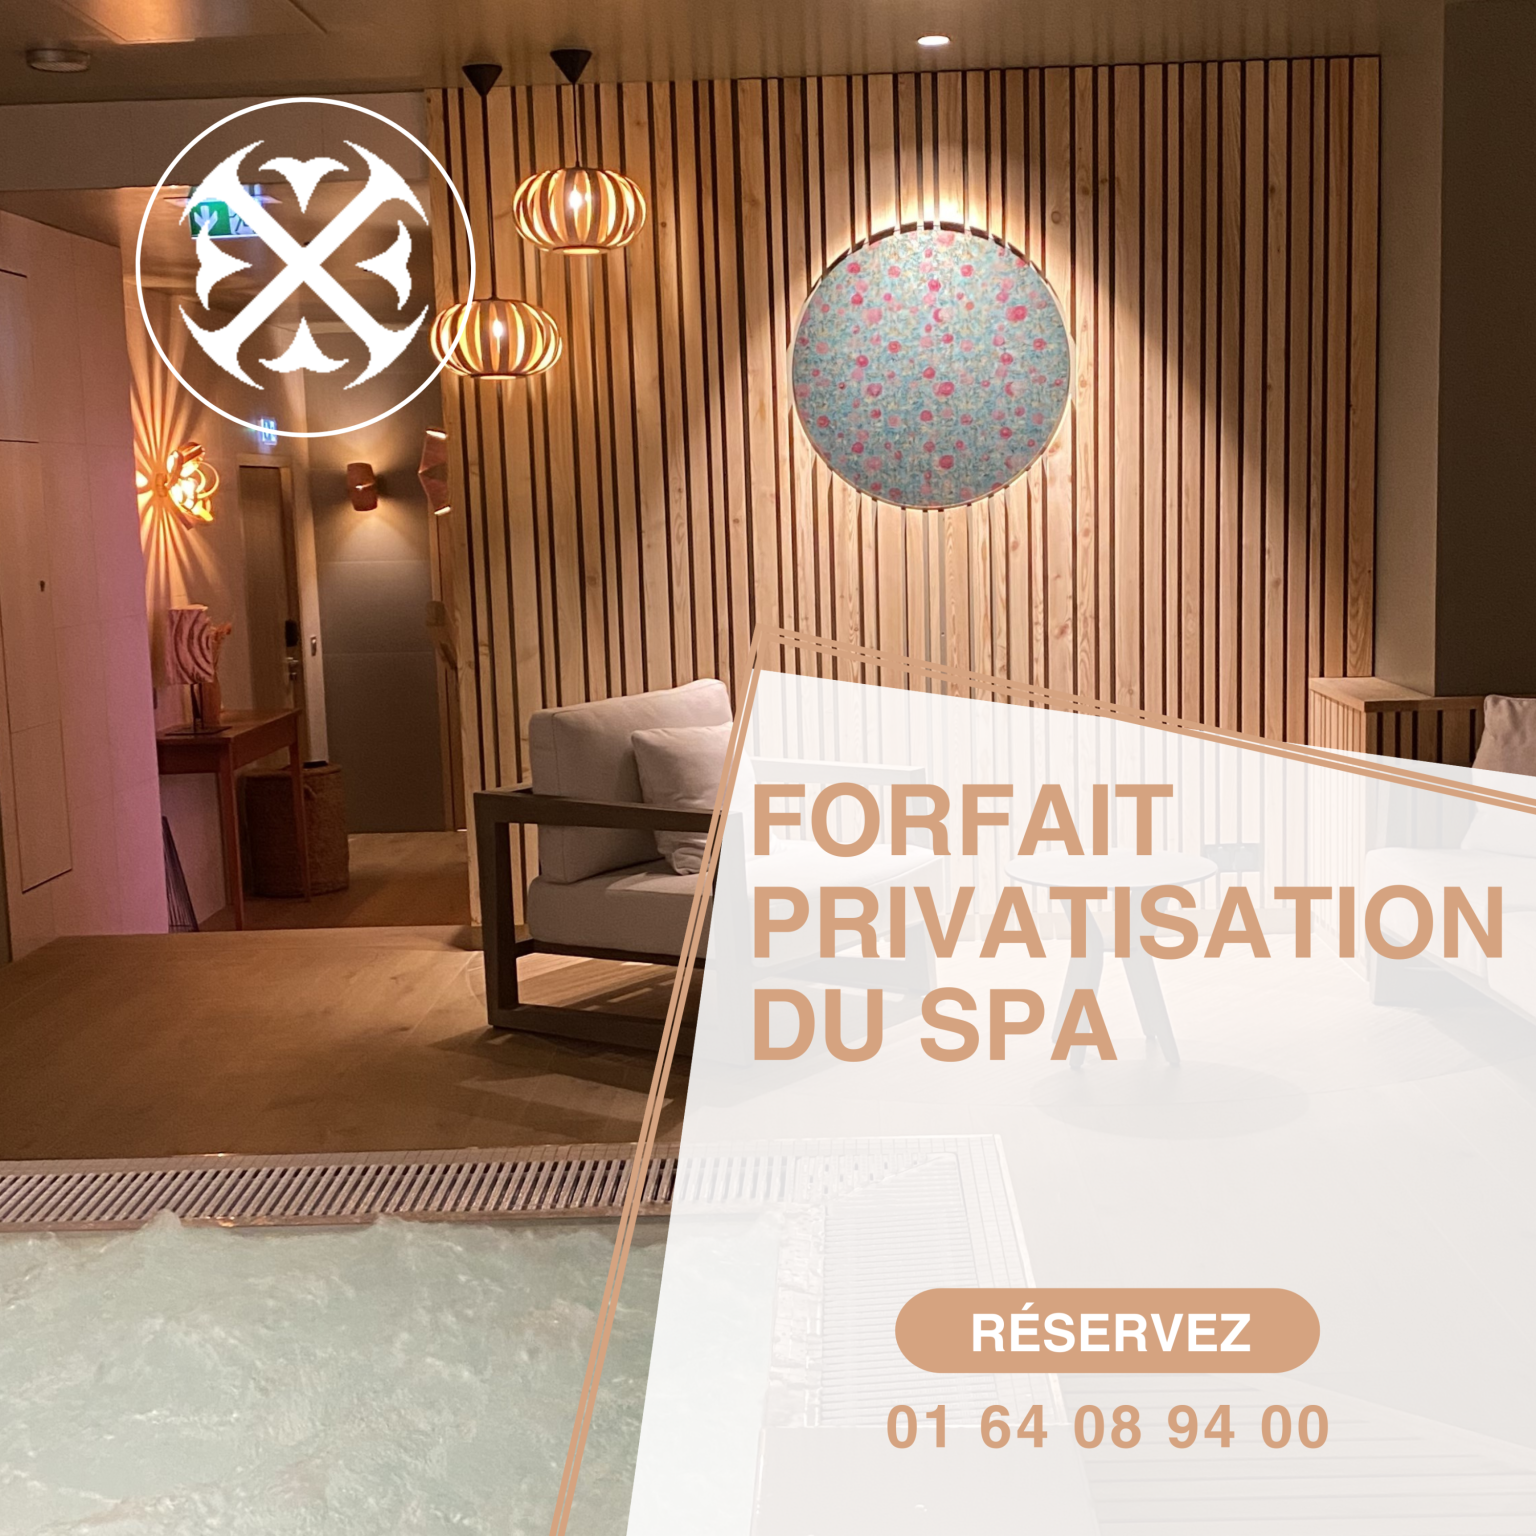 Forfait Privatisation du Spa - Hotel Spa Provins 77